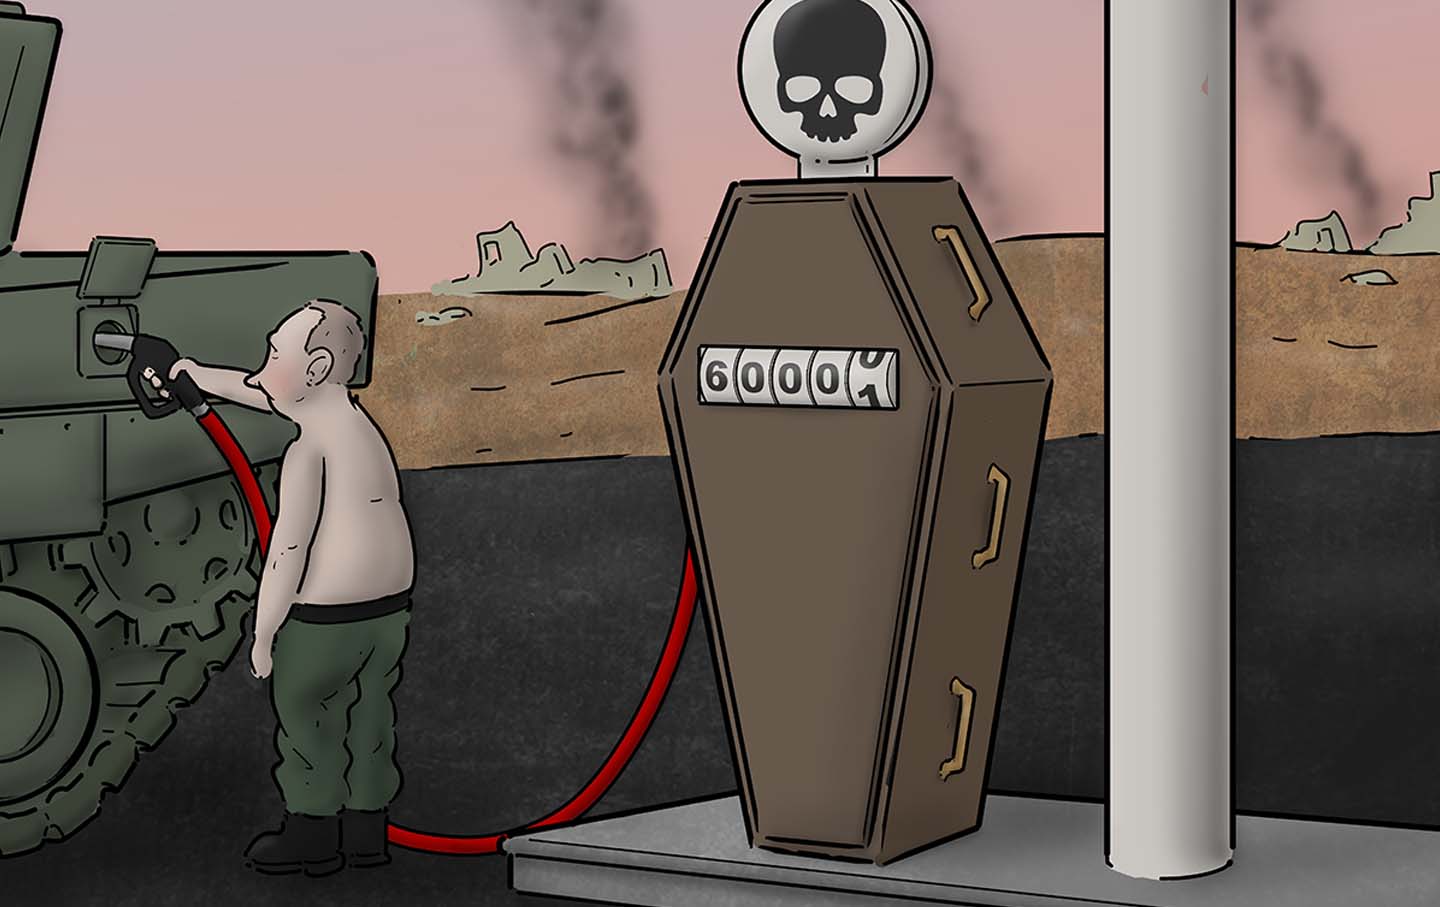 Putin’s War, Running Out of Gas